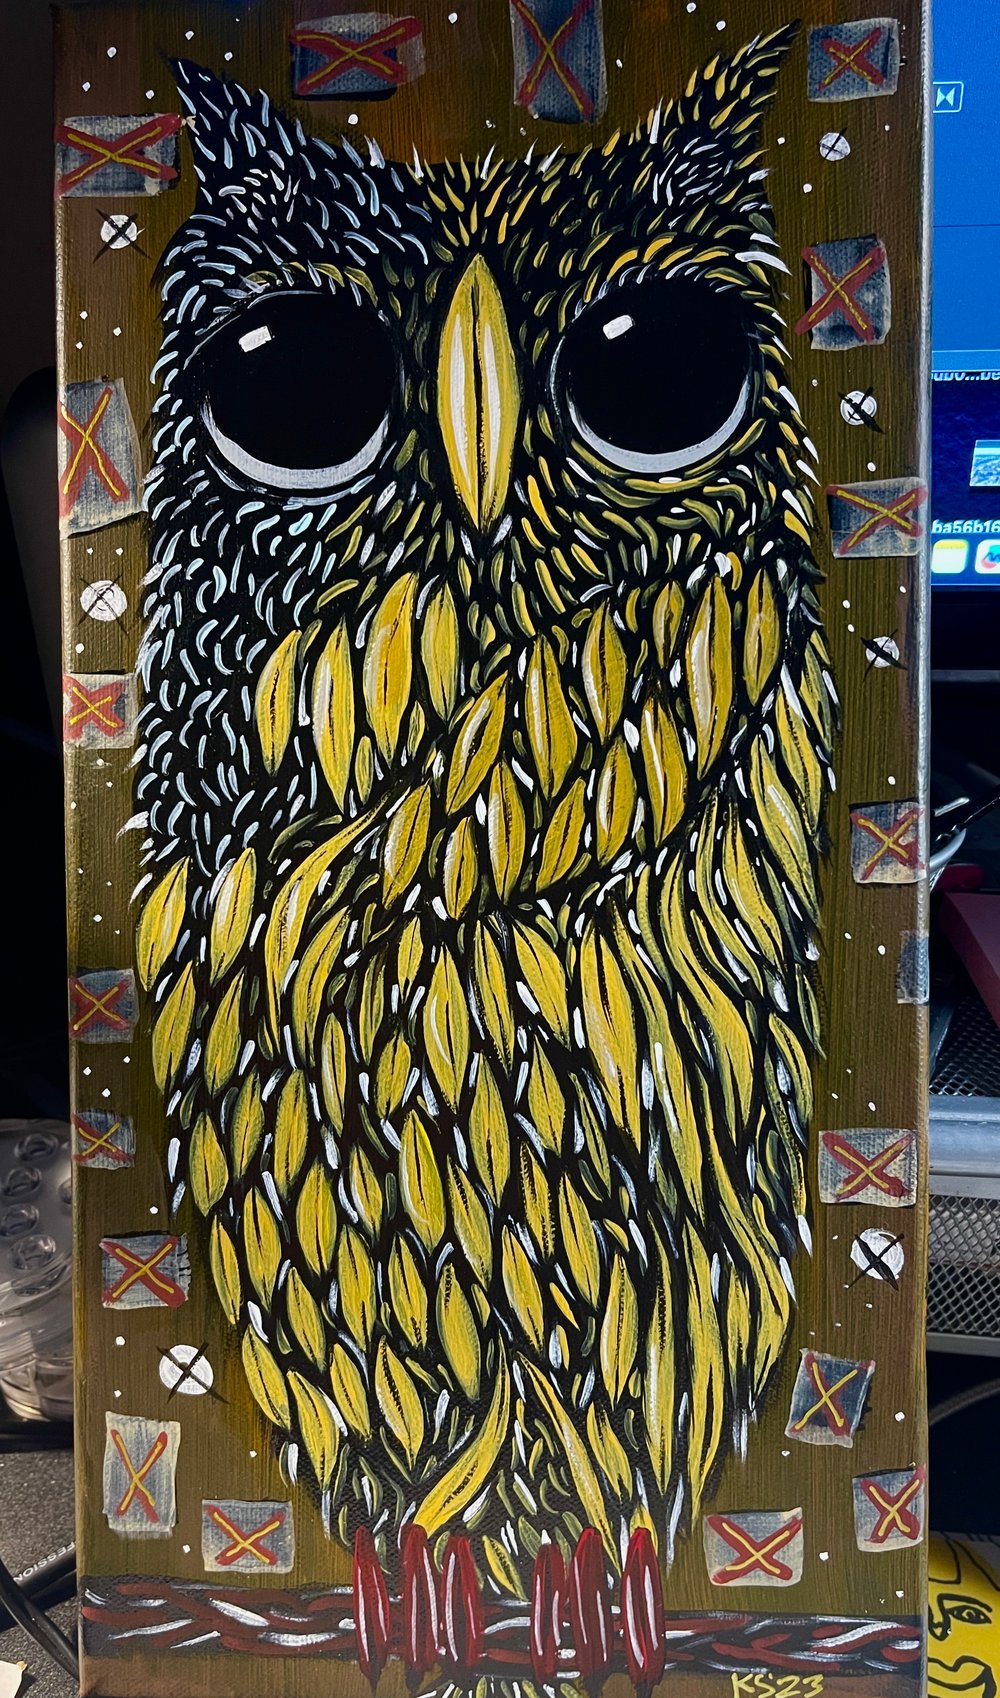 Kevin Seconds ORIGINAL 7x14 acrylic on canvas, "Debra's Banana Feathers' 